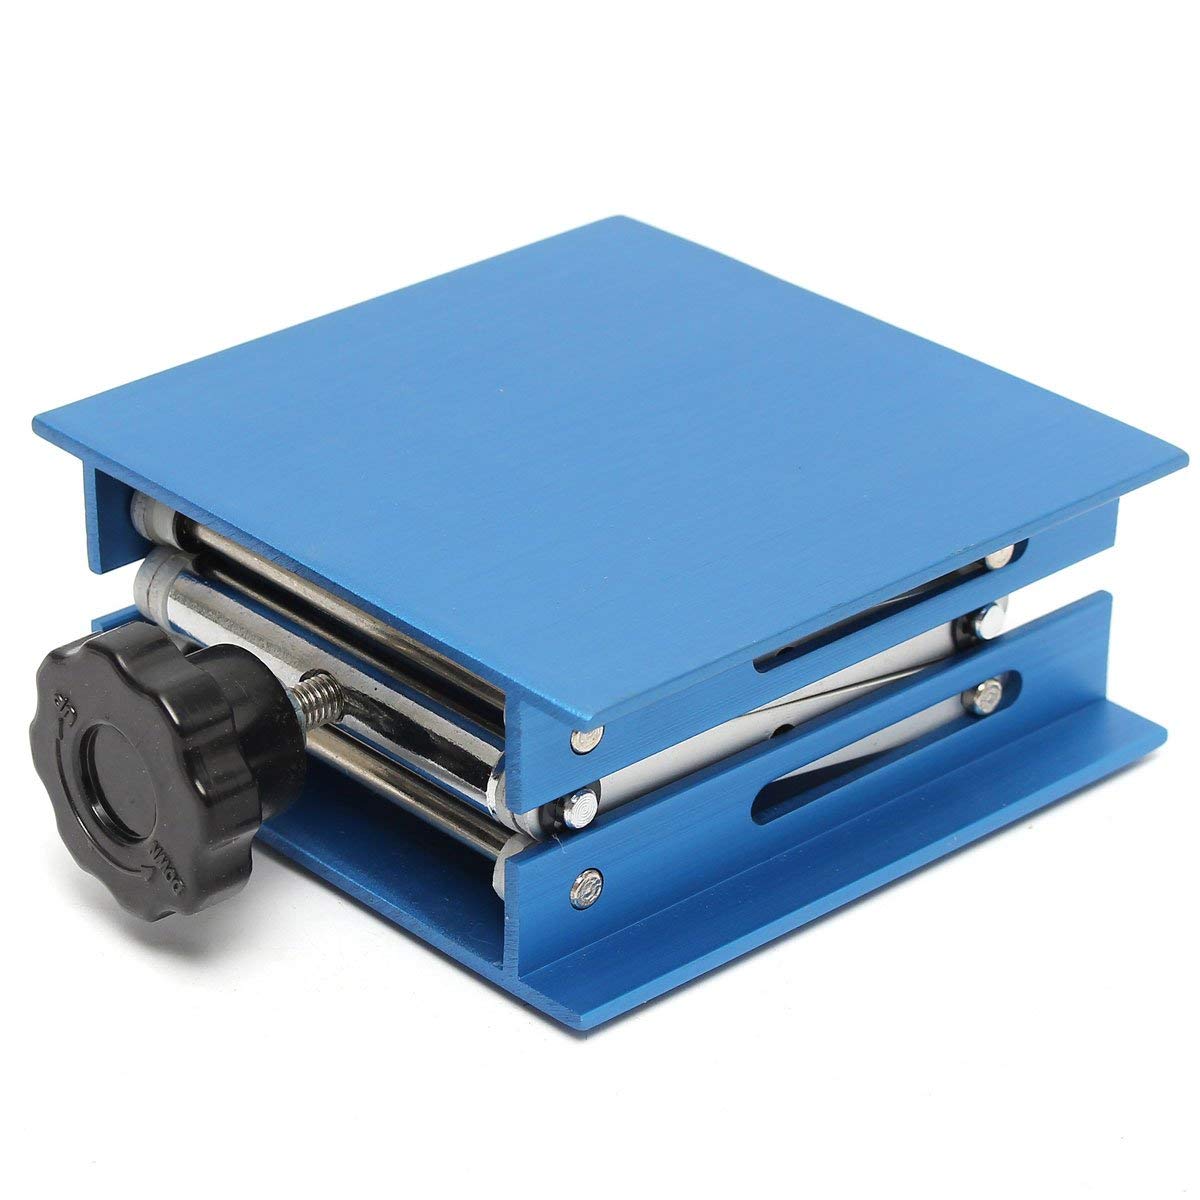 Adjustable Aluminum alloy Laboratory Lab-Lift Lifting Platforms Jack Scissor Lift Platform / Foldable Lifting Table Pad Height